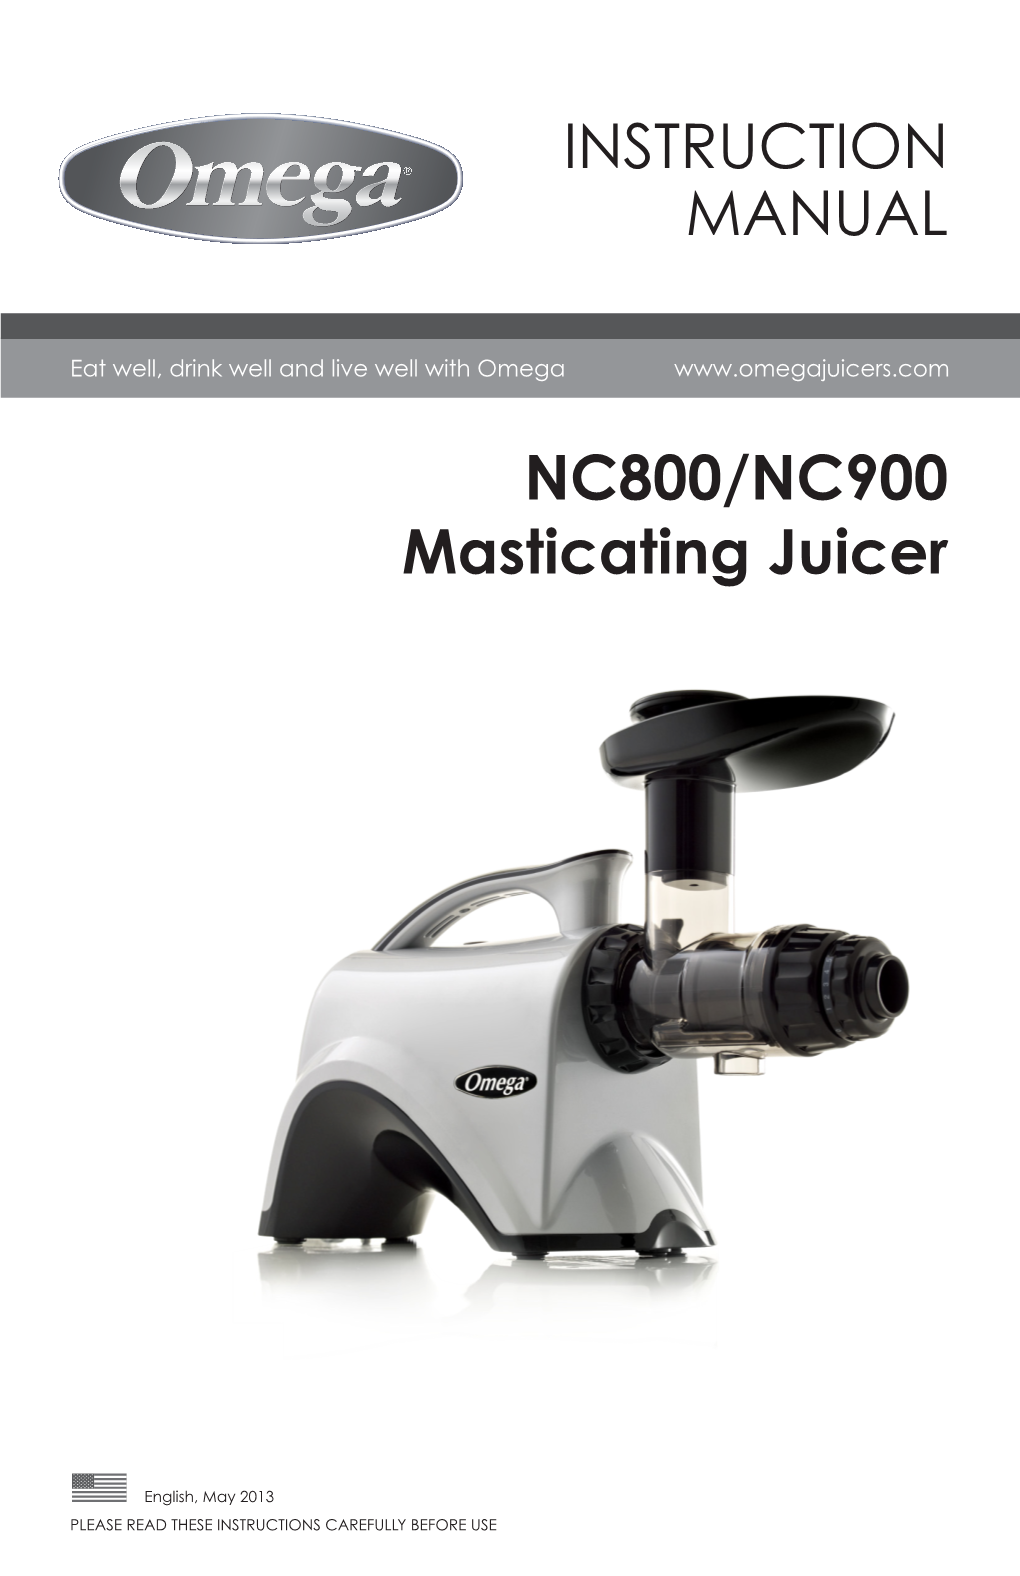 NC800/NC900 Masticating Juicer INSTRUCTION MANUAL